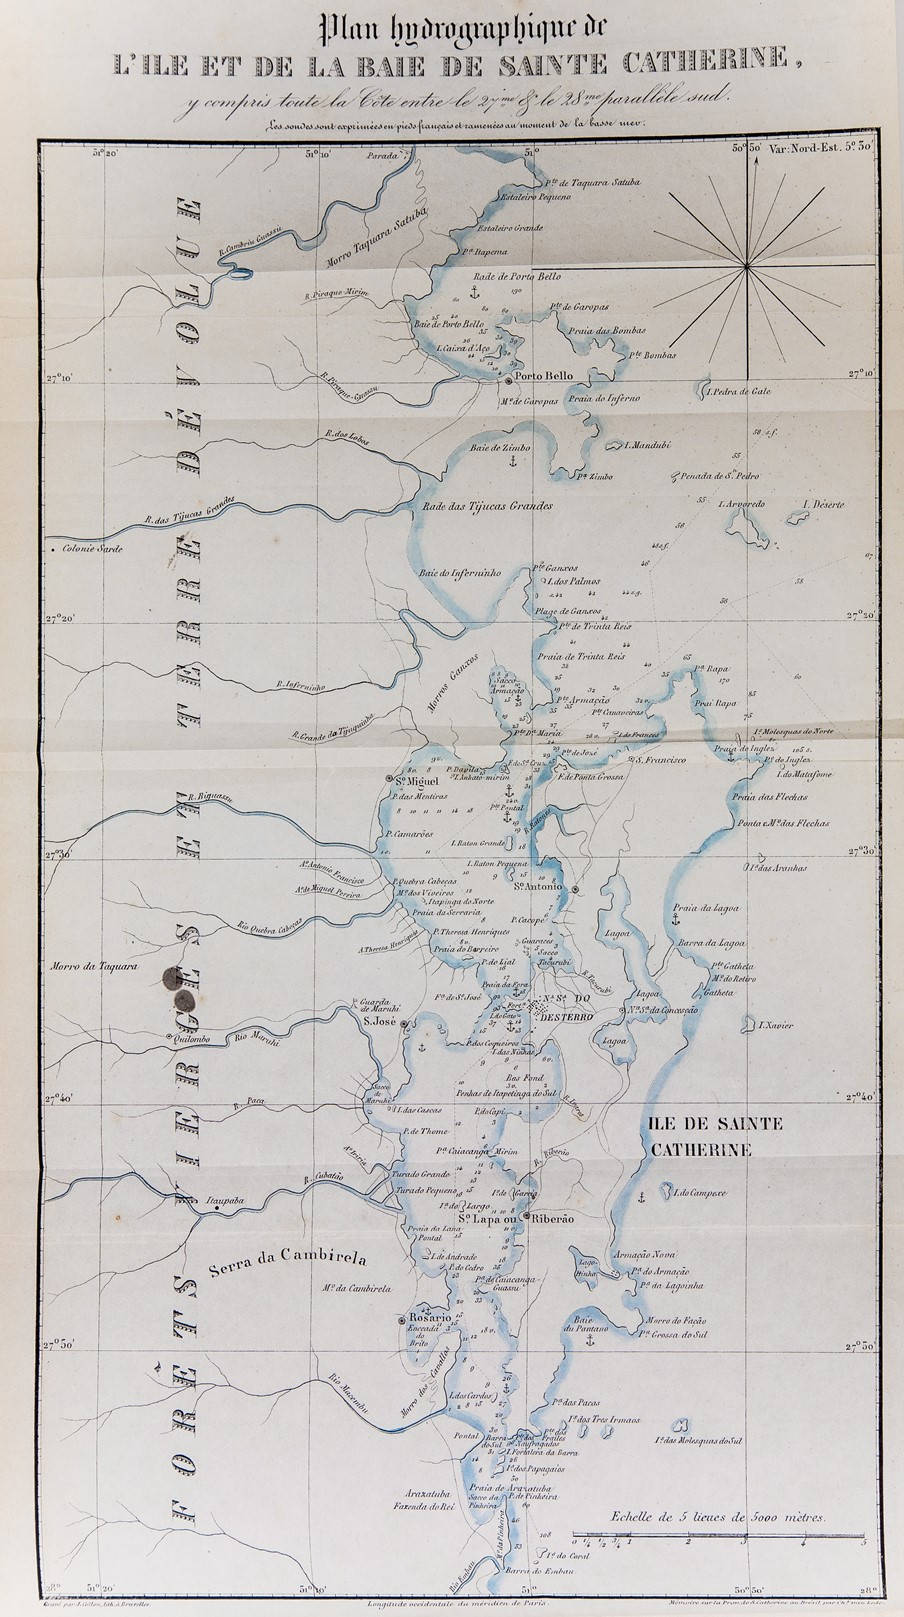 [68] Plan hydrographique de L’Ile et La Baie de Sainte Catherine, 1843. Coleção Catarina. Fonte: Ylmar Corrêa Neto.